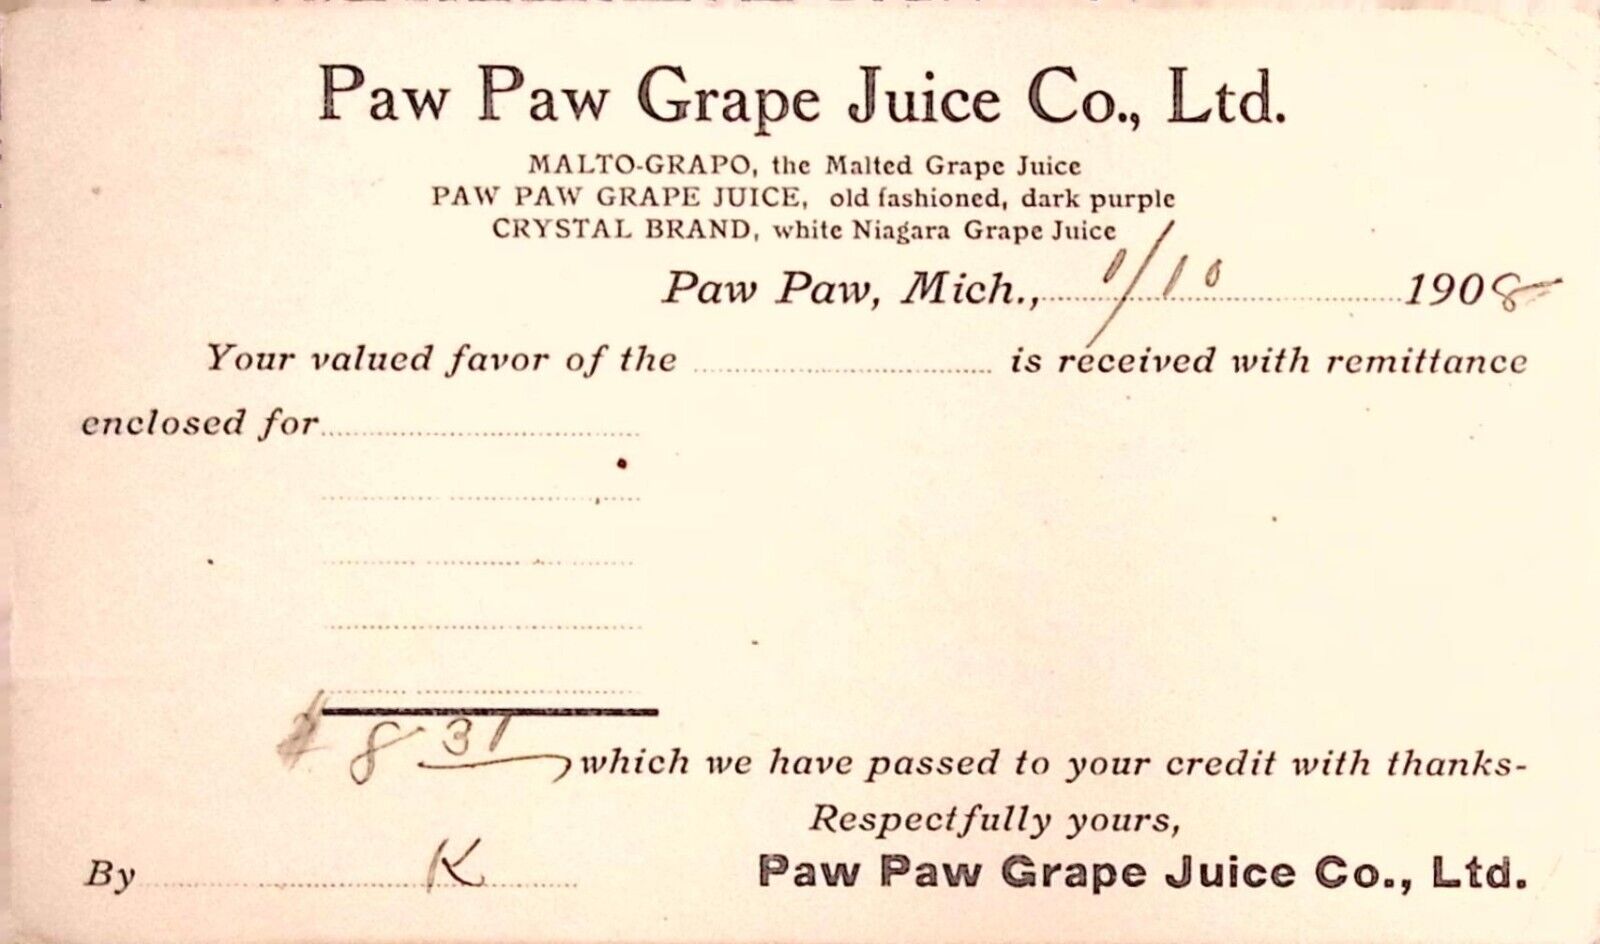 Paw Paw Grape Juice Co. 1908 Michigan Postal Card Purchase Receipt